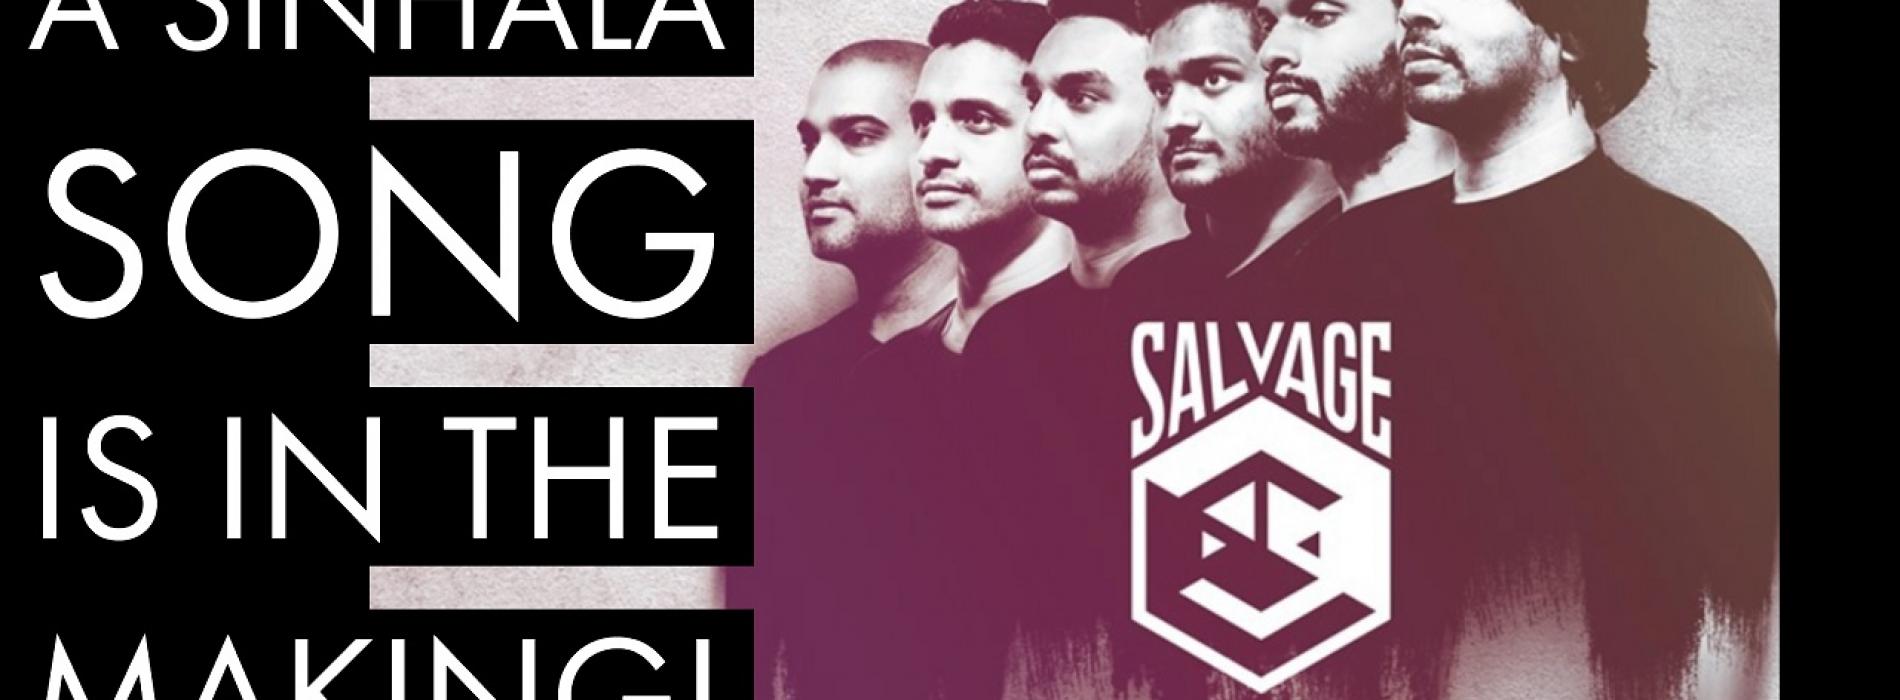 Salvage Announces New Sinhala Single!